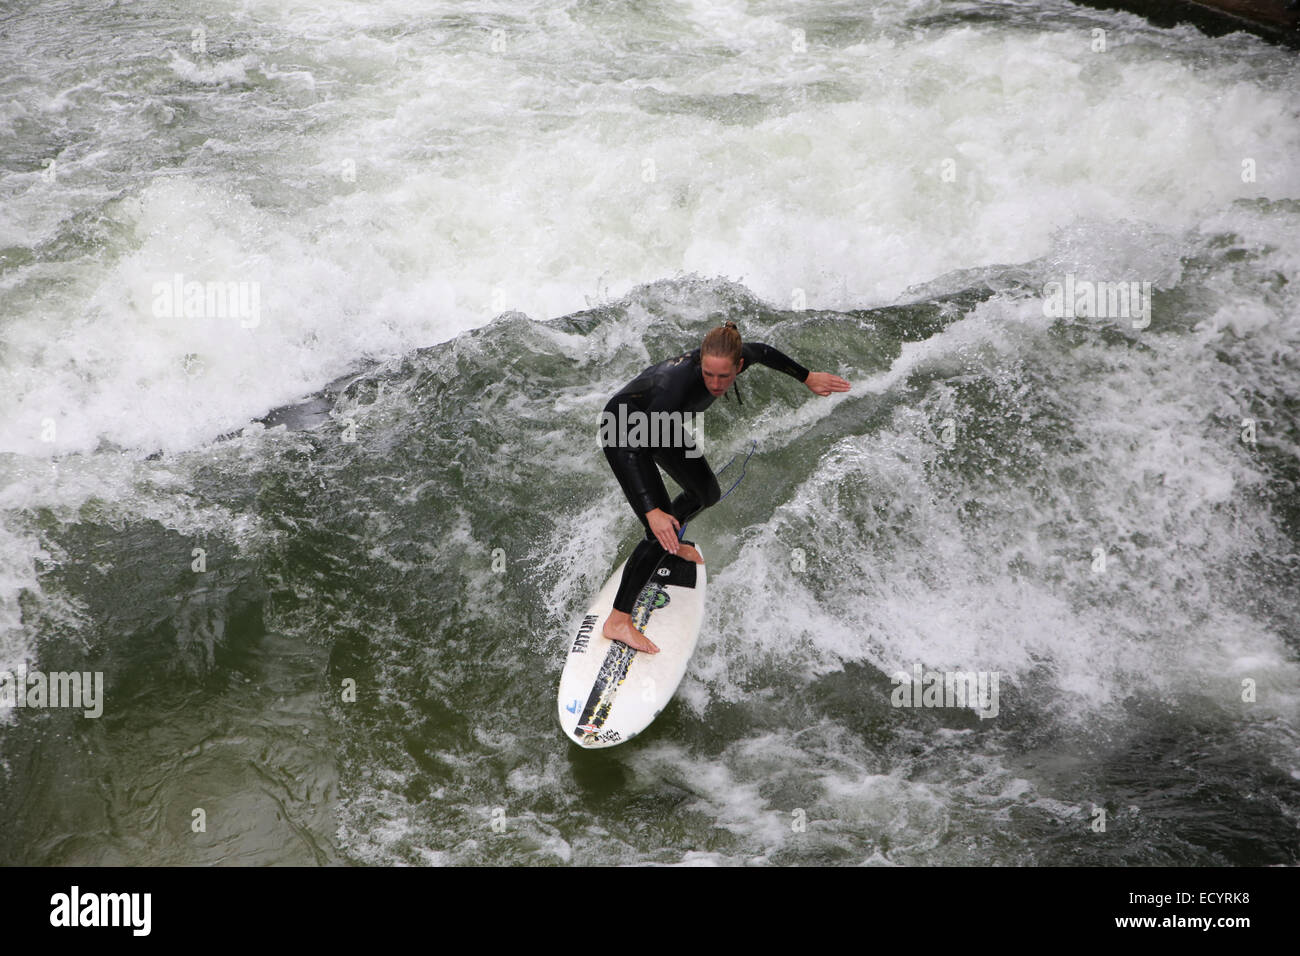 woman surfer surfing man-made wave Eisbach Wave Munich Stock Photo